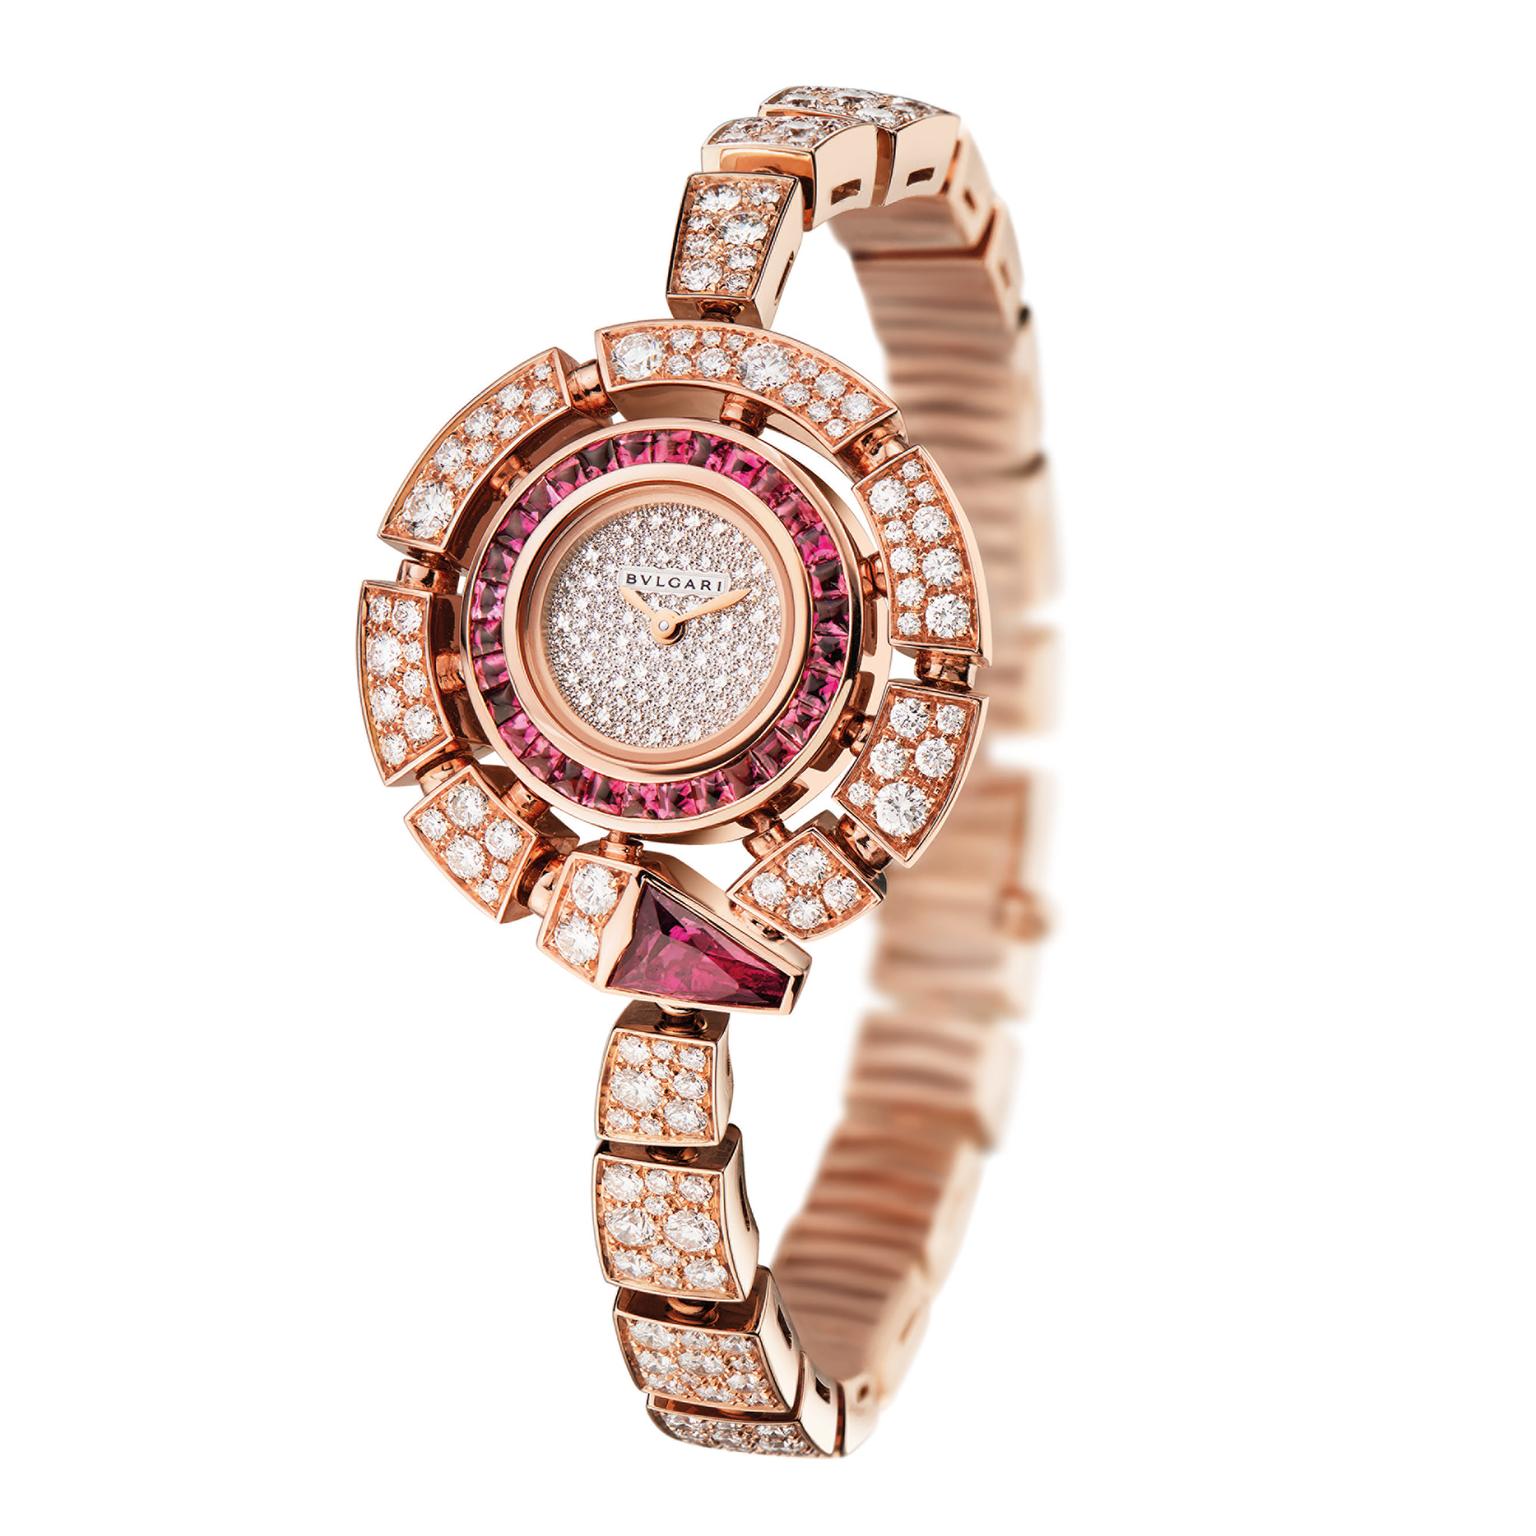 Bulgari Serpenti Incantati pink gold and rubellite watch